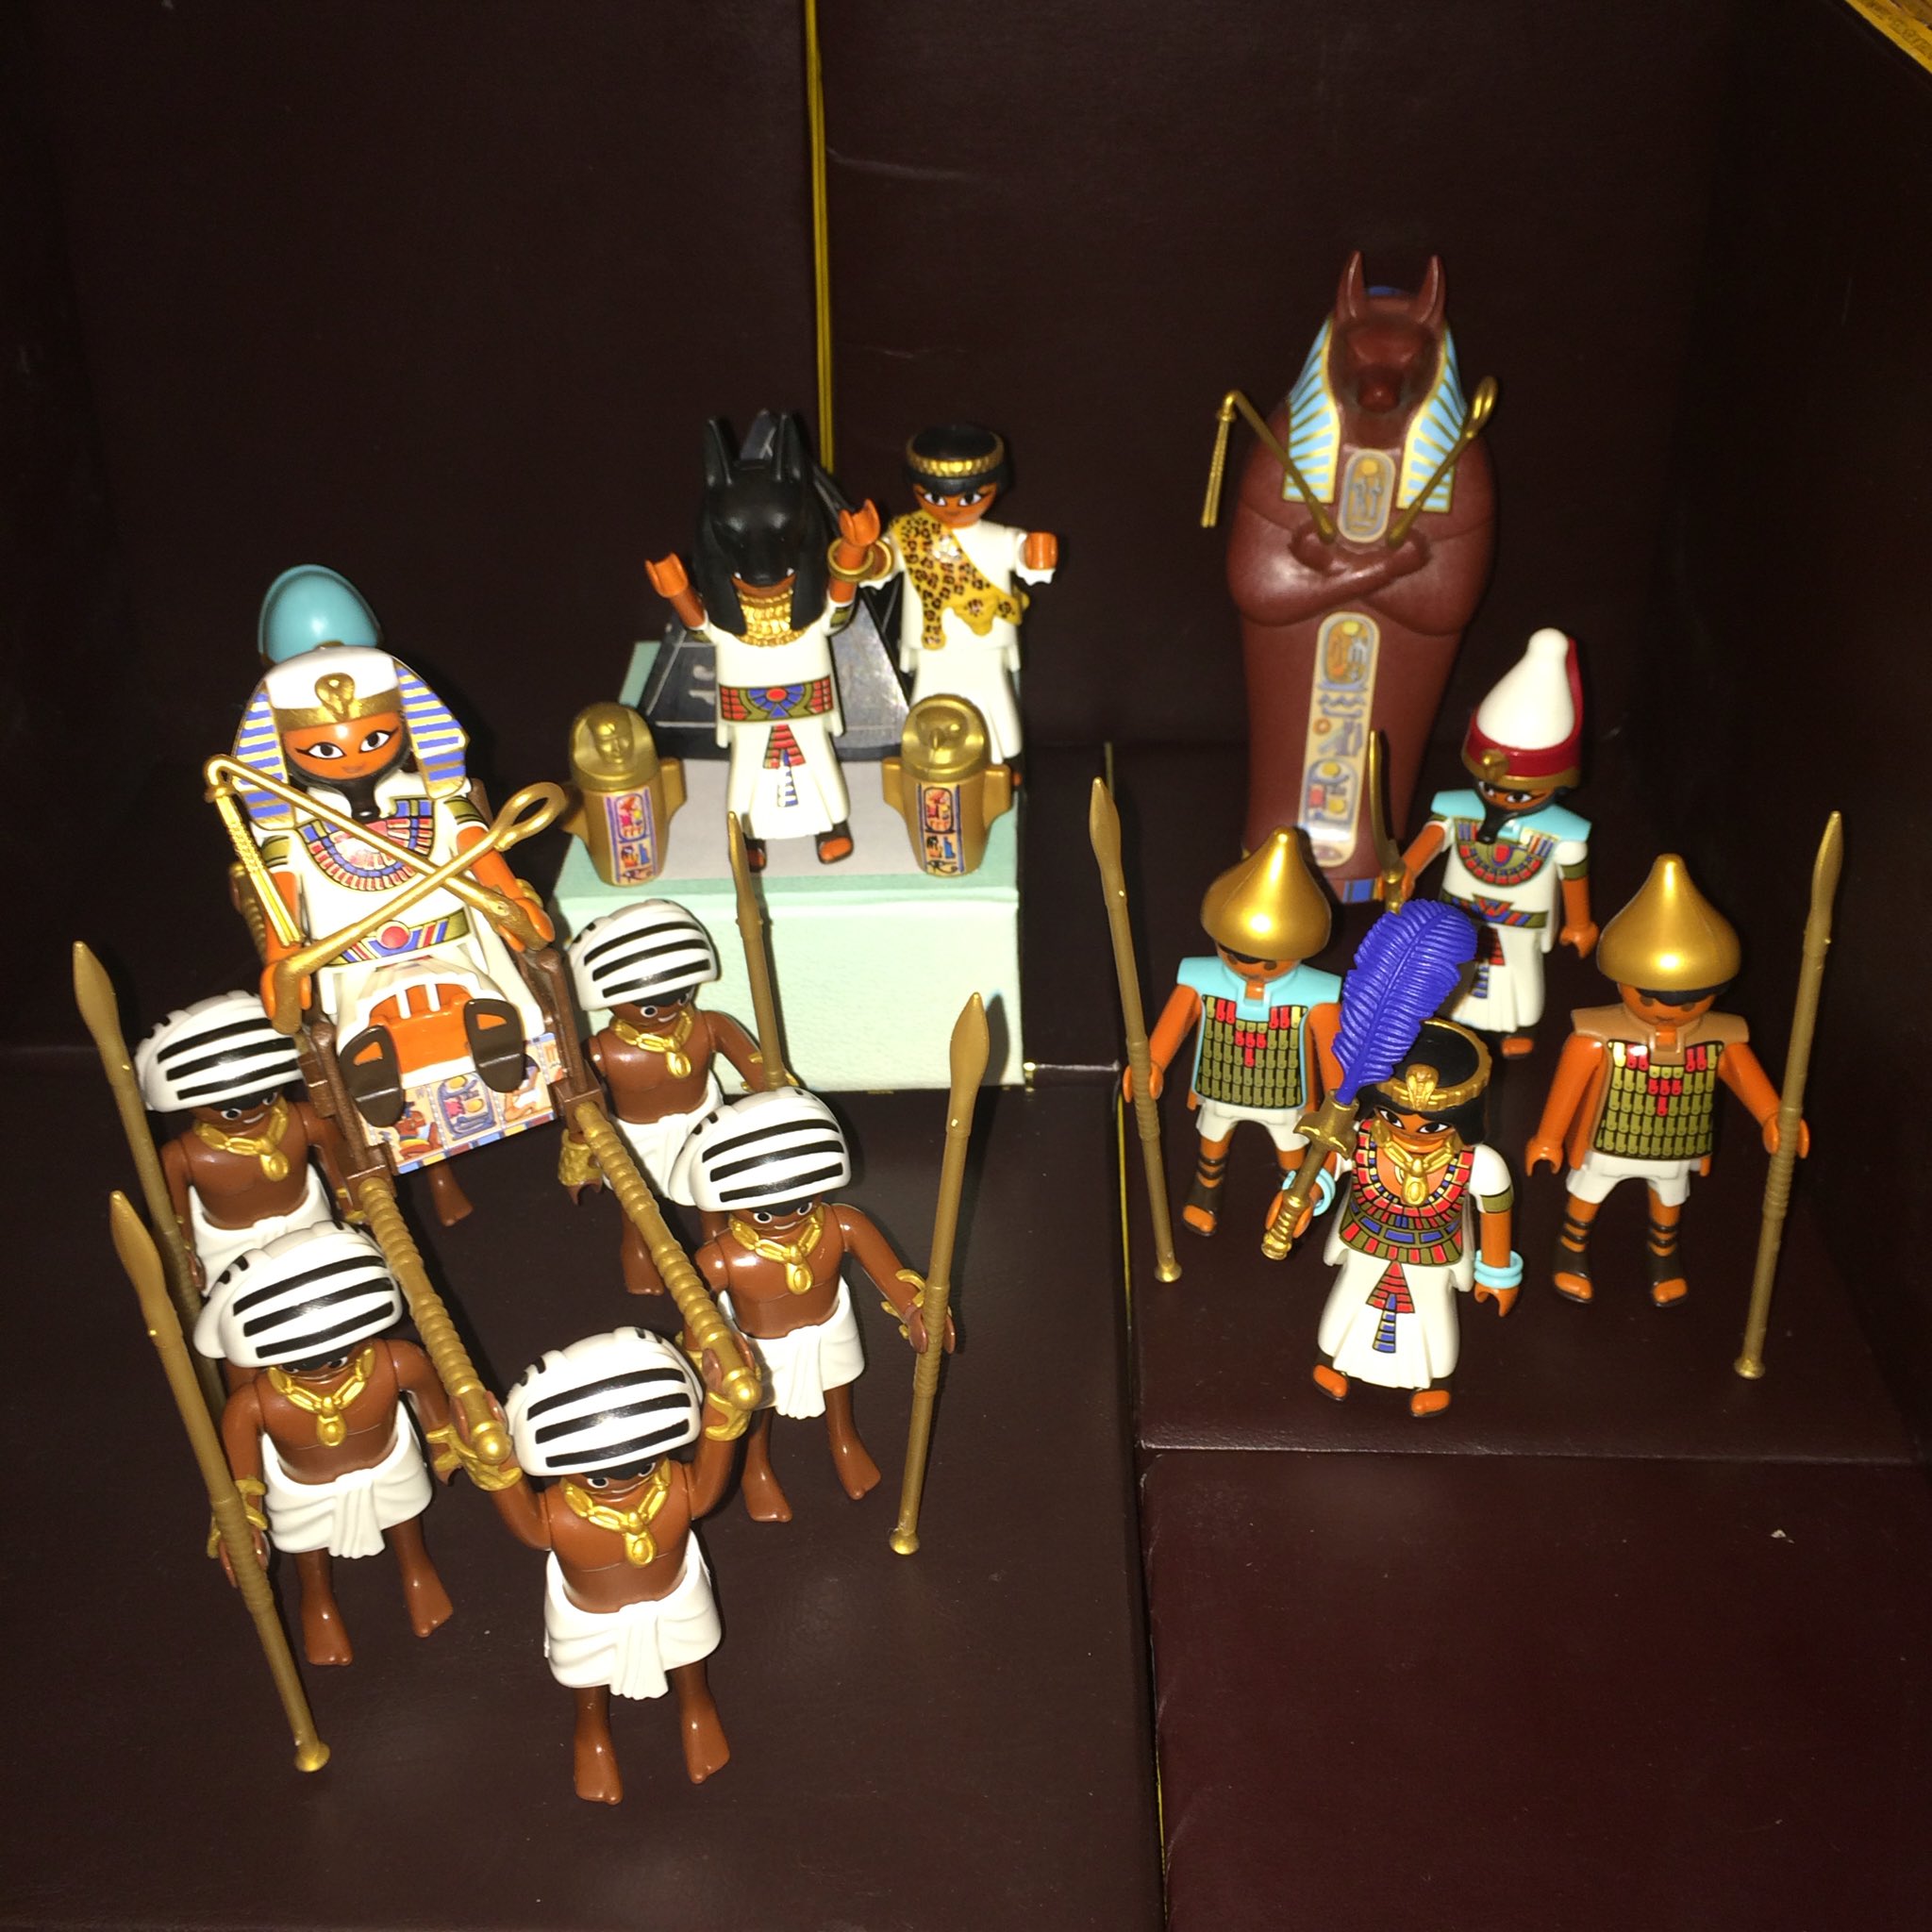 Juanra on Twitter: "La corte del #faraon #Egipto #playmobil #antiguoegipto #jeroglíficos #juguetes #estoyfatal https://t.co/De5MMke3Bi" / Twitter